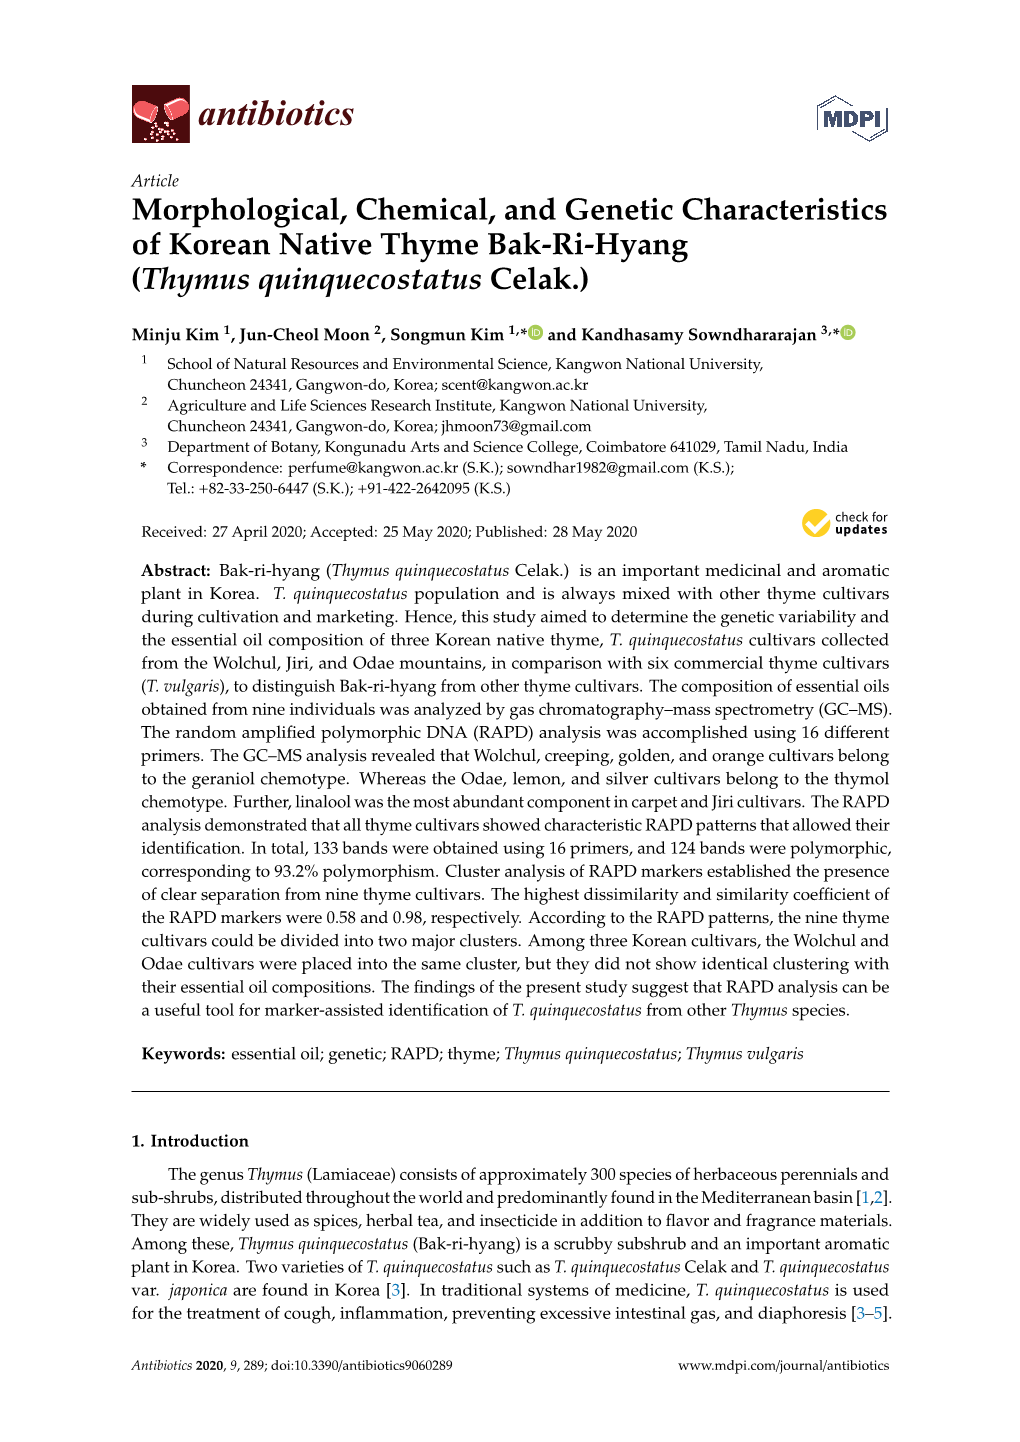 Morphological, Chemical, and Genetic Characteristics of Korean Native Thyme Bak-Ri-Hyang (Thymus Quinquecostatus Celak.)